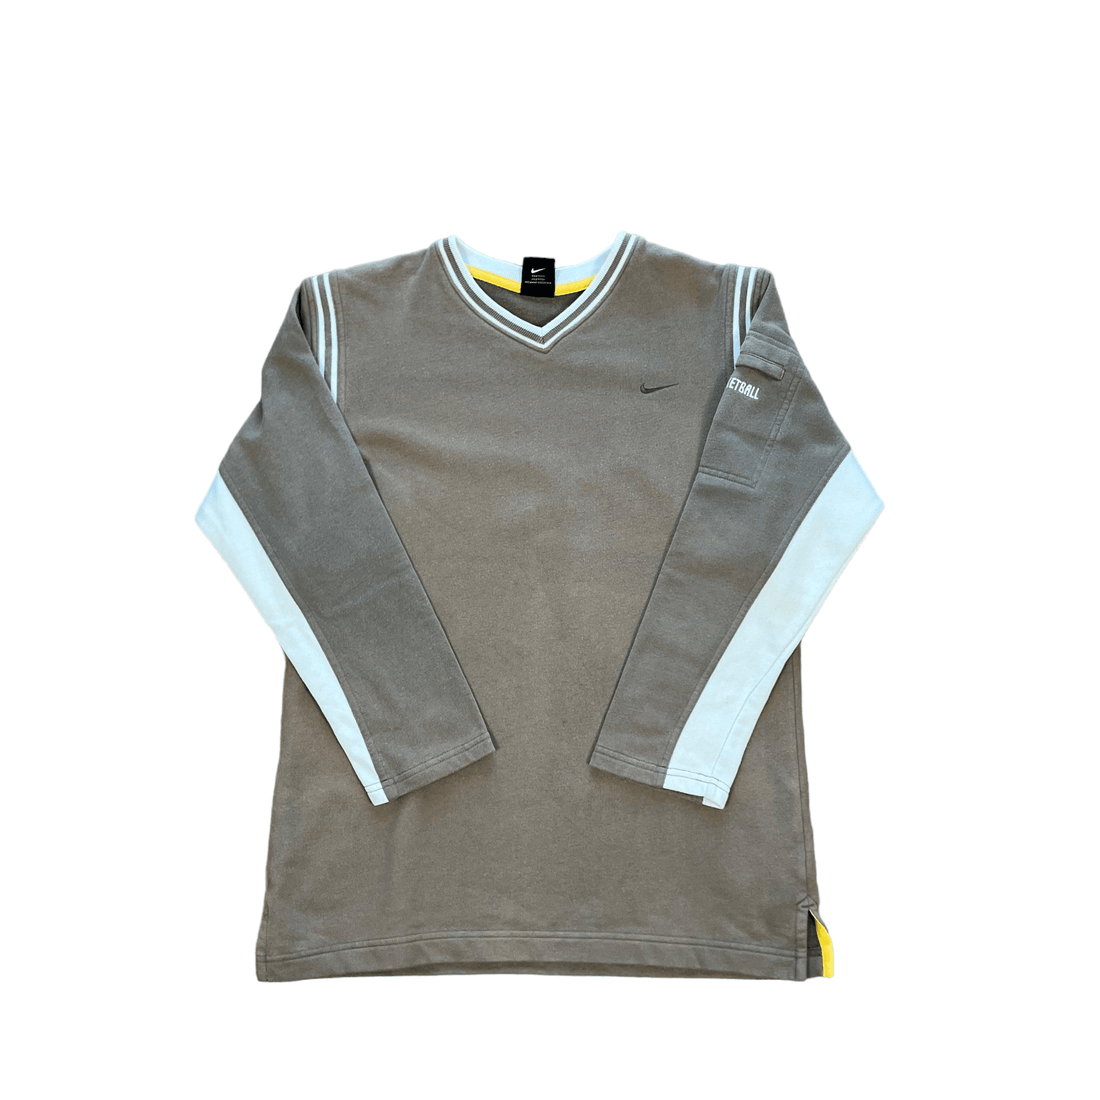 Women’s Vintage Brown/ Grey + White Nike Sweatshirt - Large - The Streetwear Studio